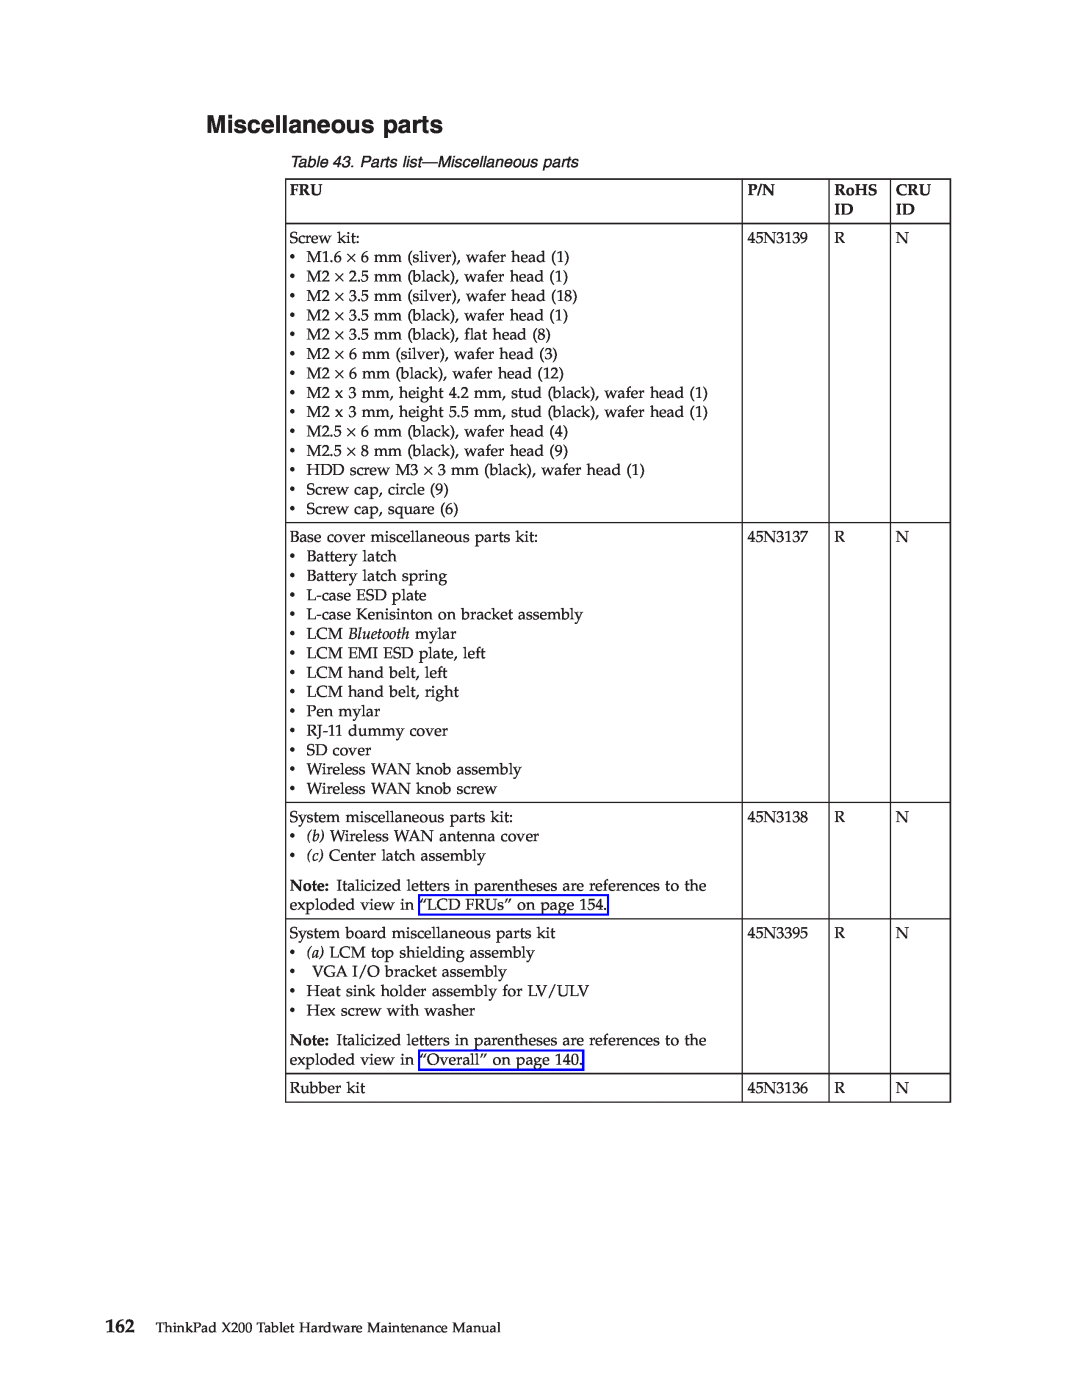 Lenovo X200 manual Miscellaneous parts, Parts list—Miscellaneousparts 